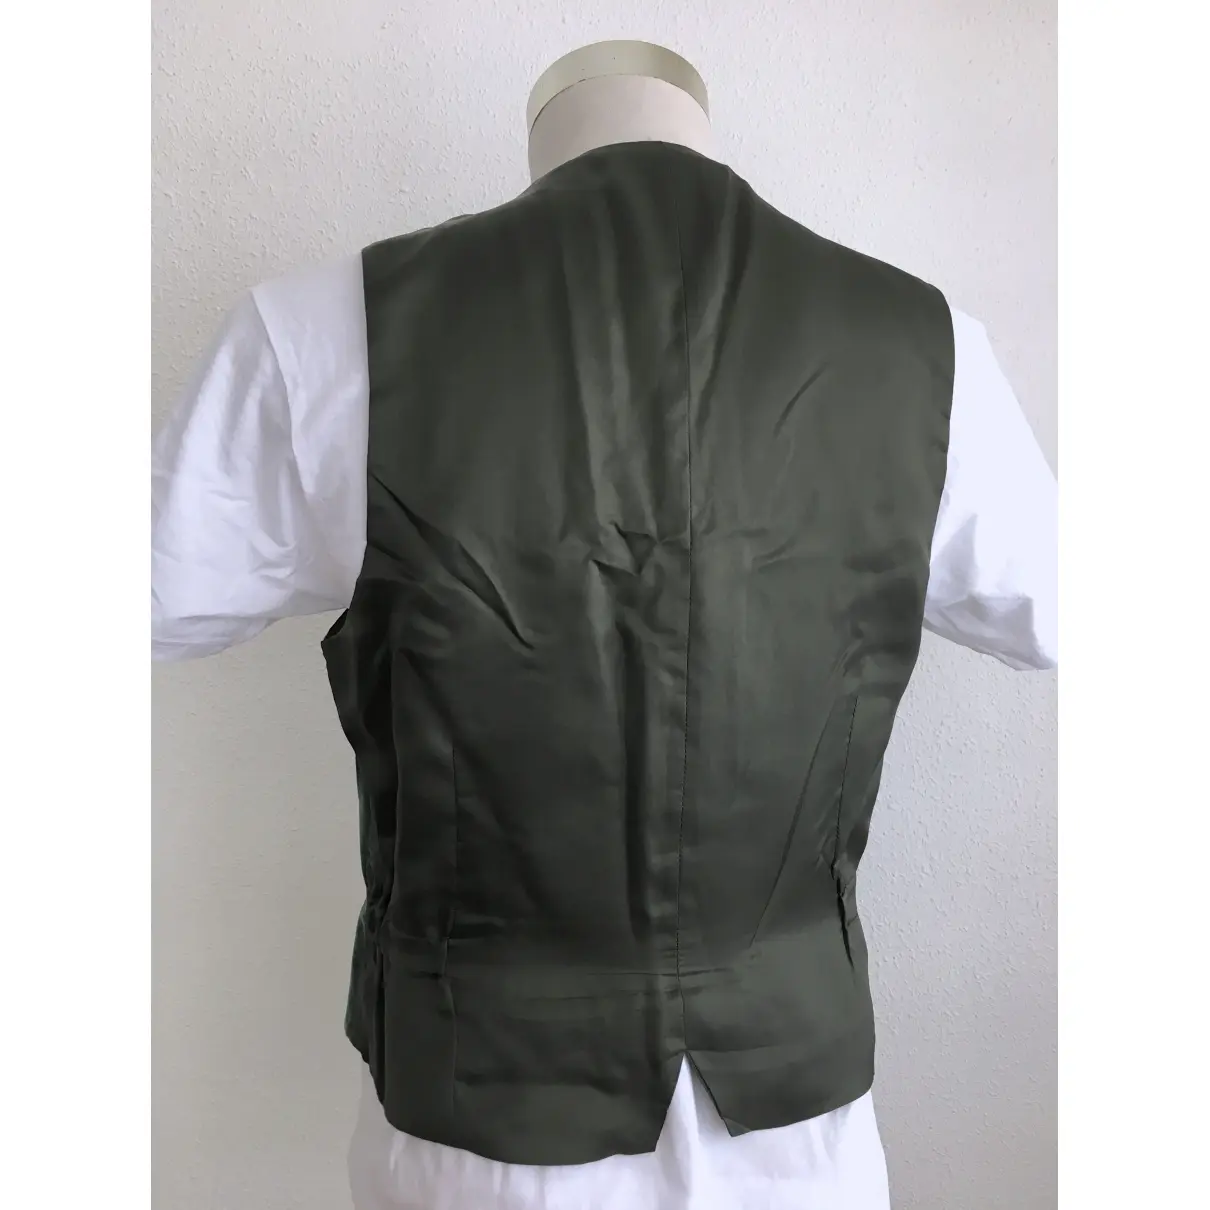 Loewe Velvet jacket for sale - Vintage